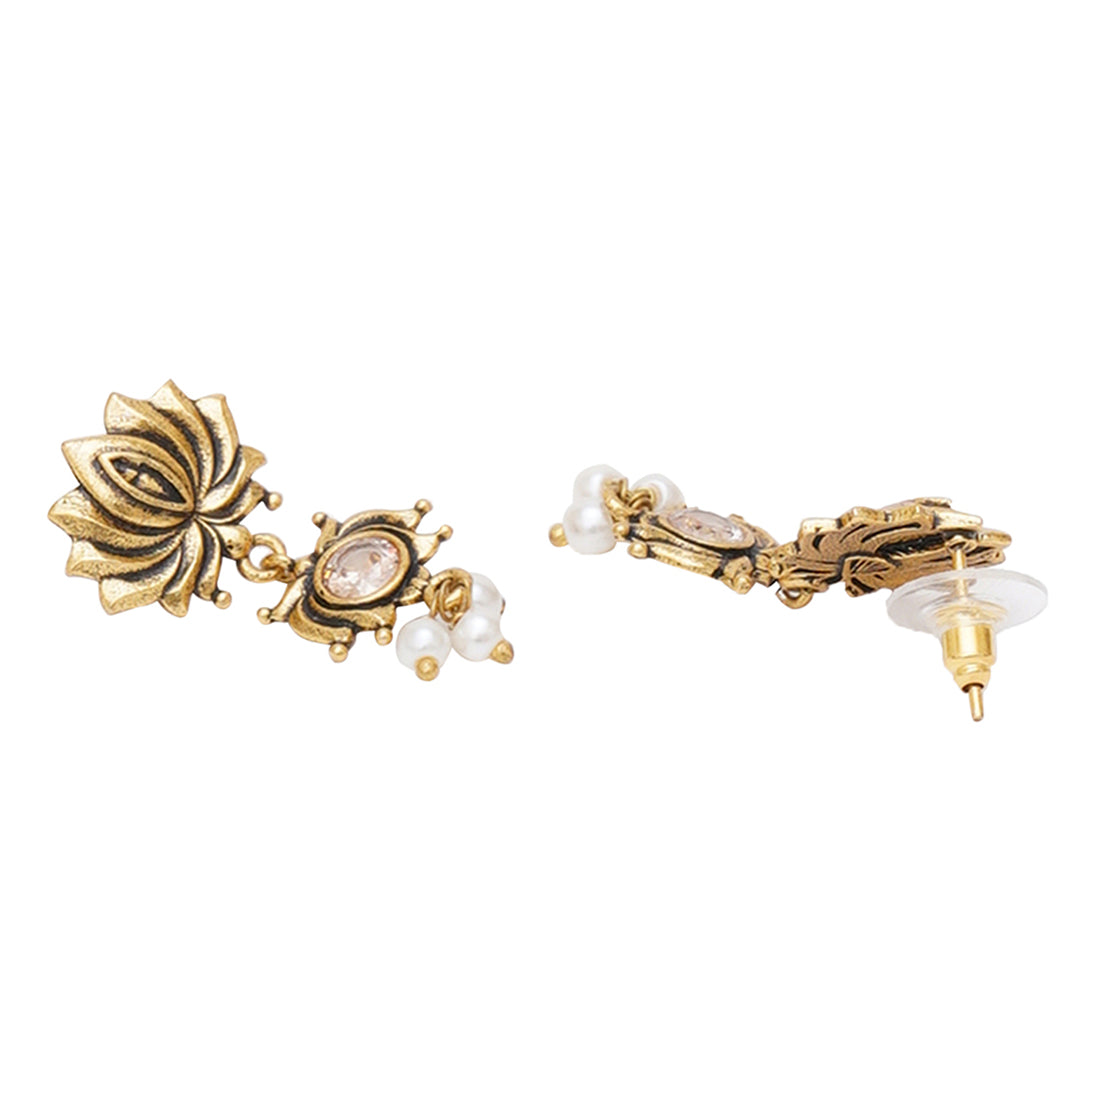 Apsara Lotus Motif Filigree Gold Plated Brass Jewellery Set